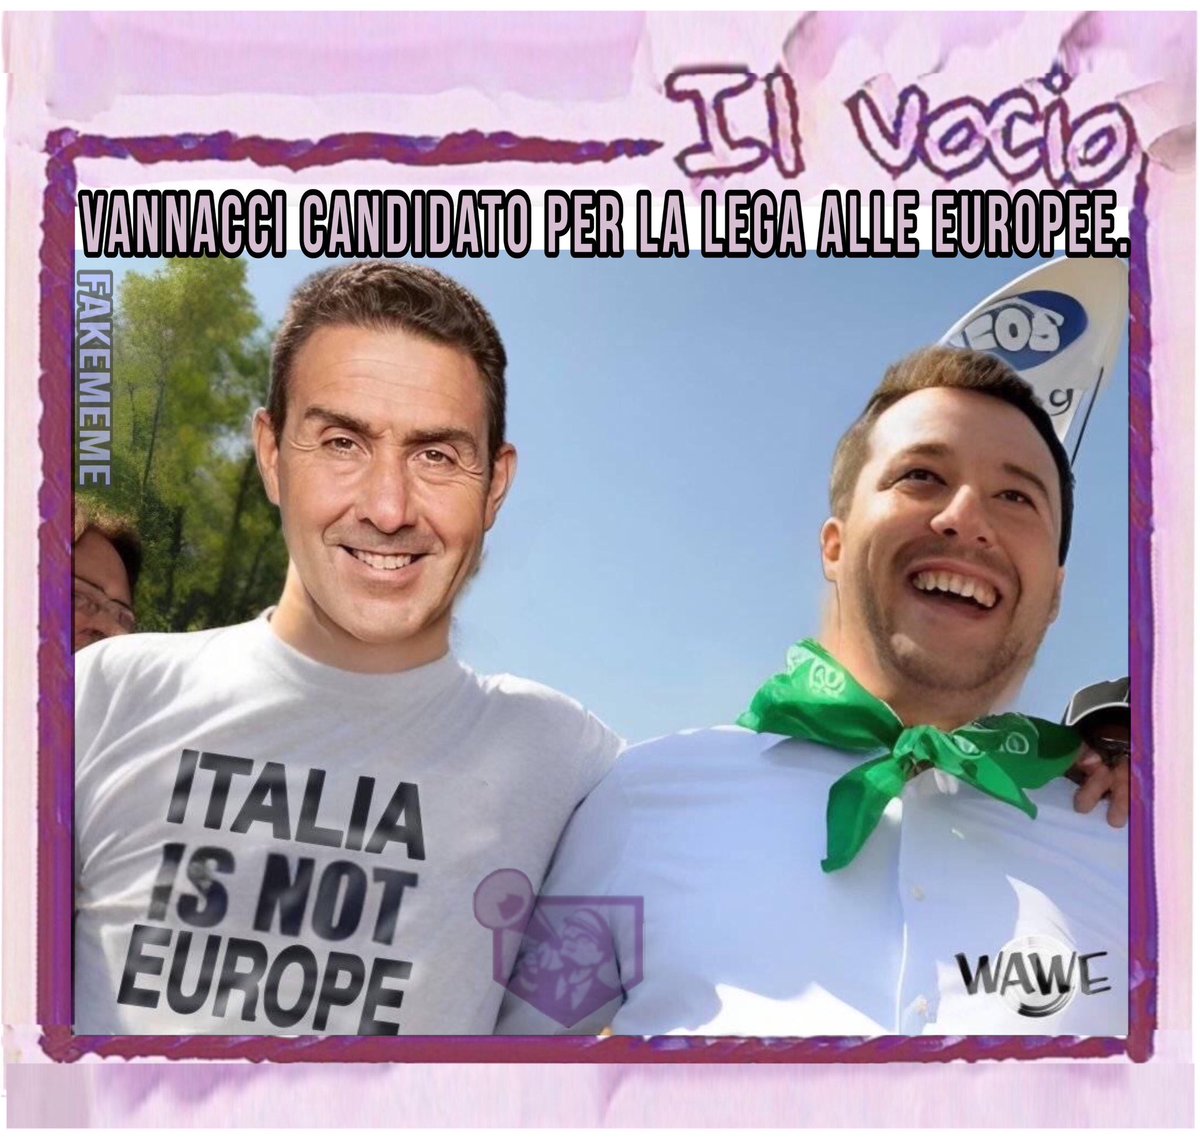 Vannacci candidato per la Lega alle Europee. WaWe @WaWe970 #28aprile #ilvocio #Vannacci #Europee #candidato #ItalyIsNotEurope #Salvini #Lega